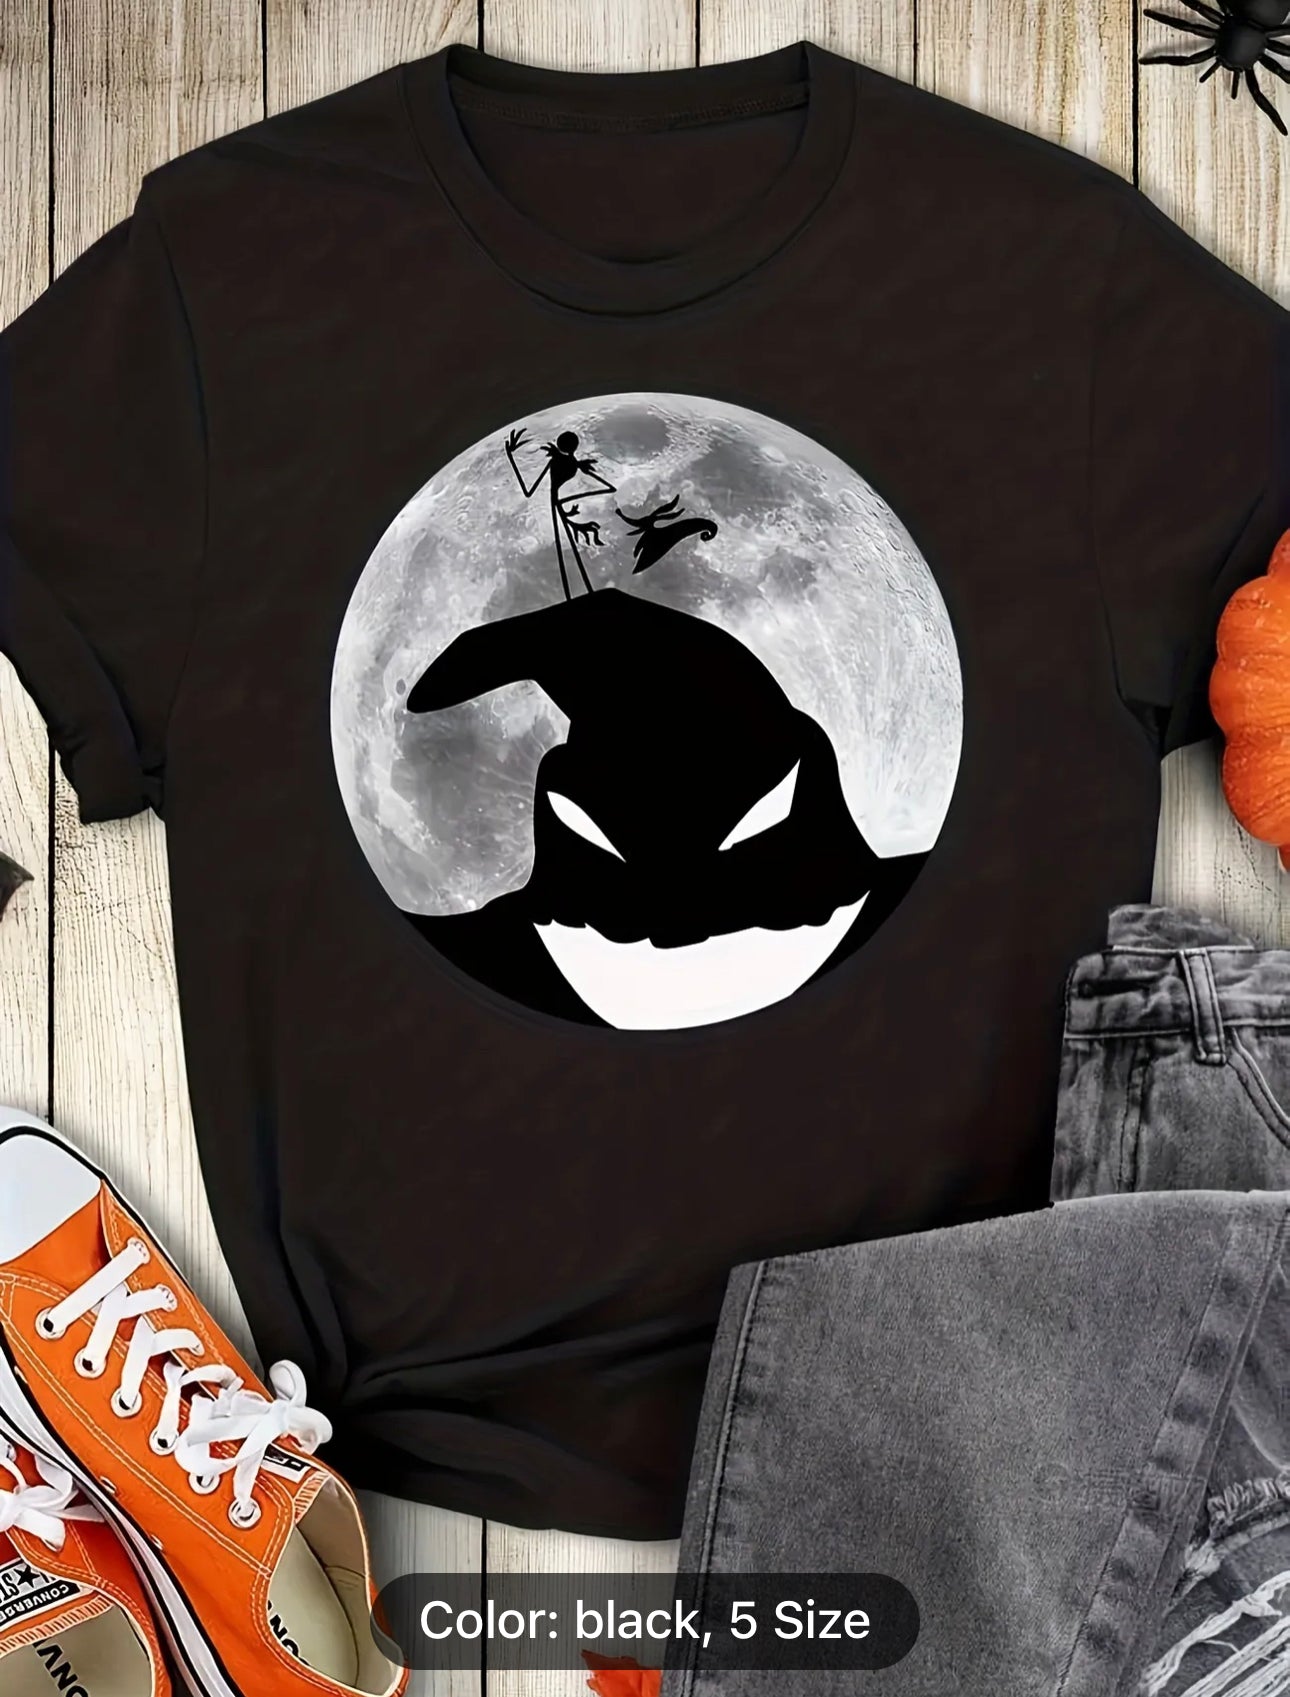 Halloween Nightmare Print Tee, Casual Short Sleeve Crew Neck T-shirt, Women's Clothing